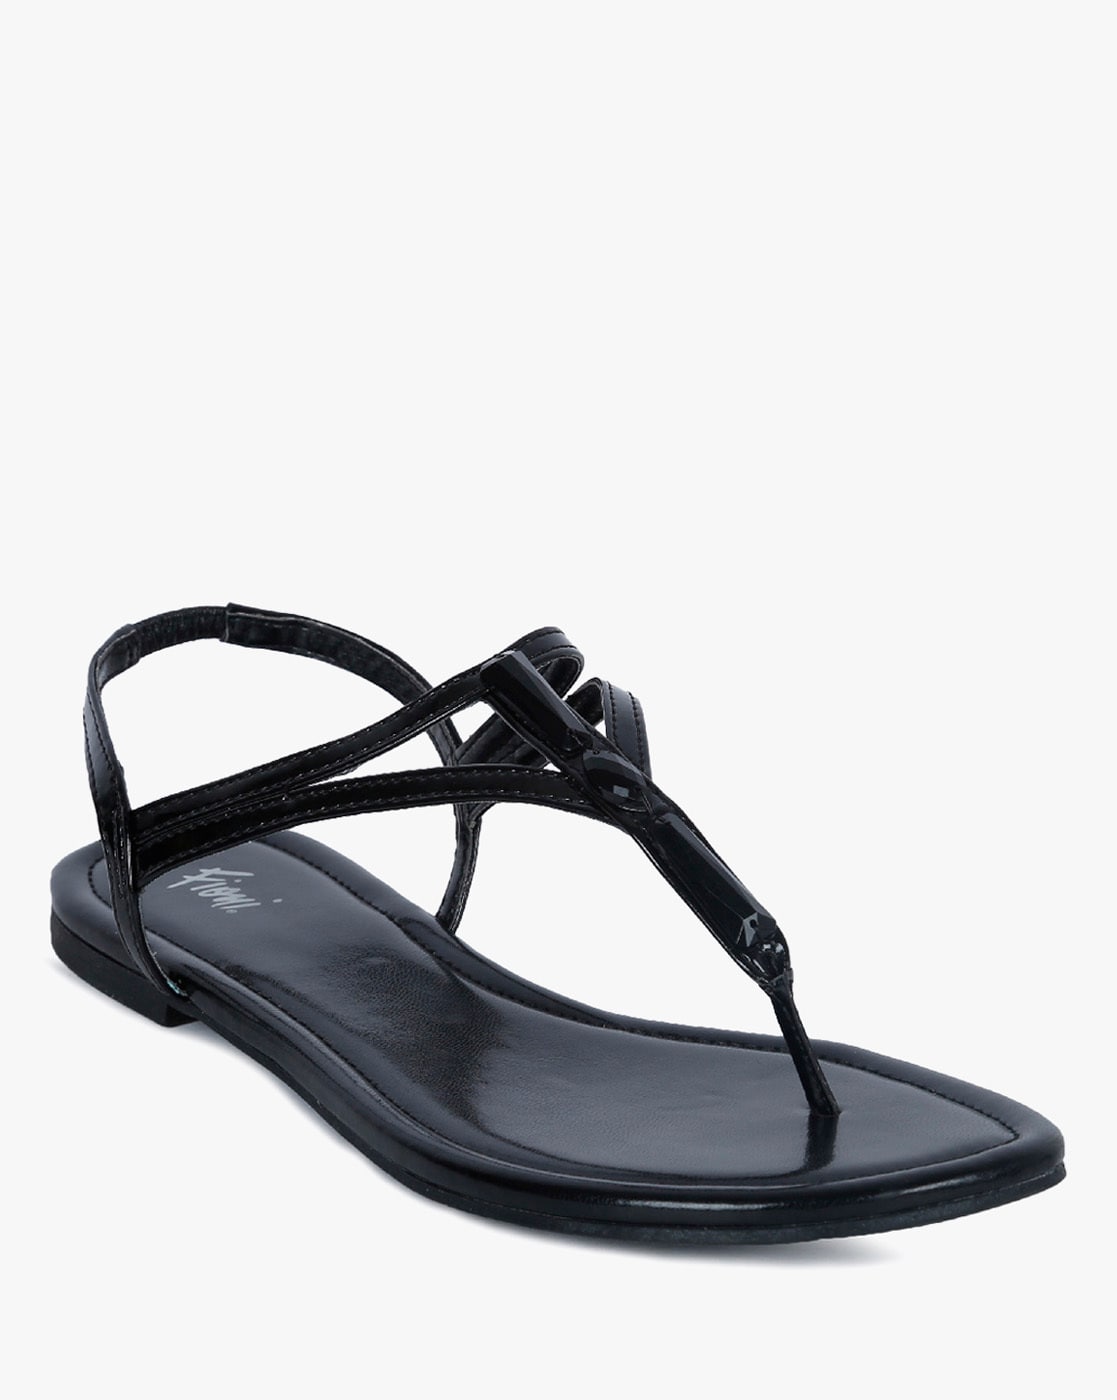 fioni black sandals